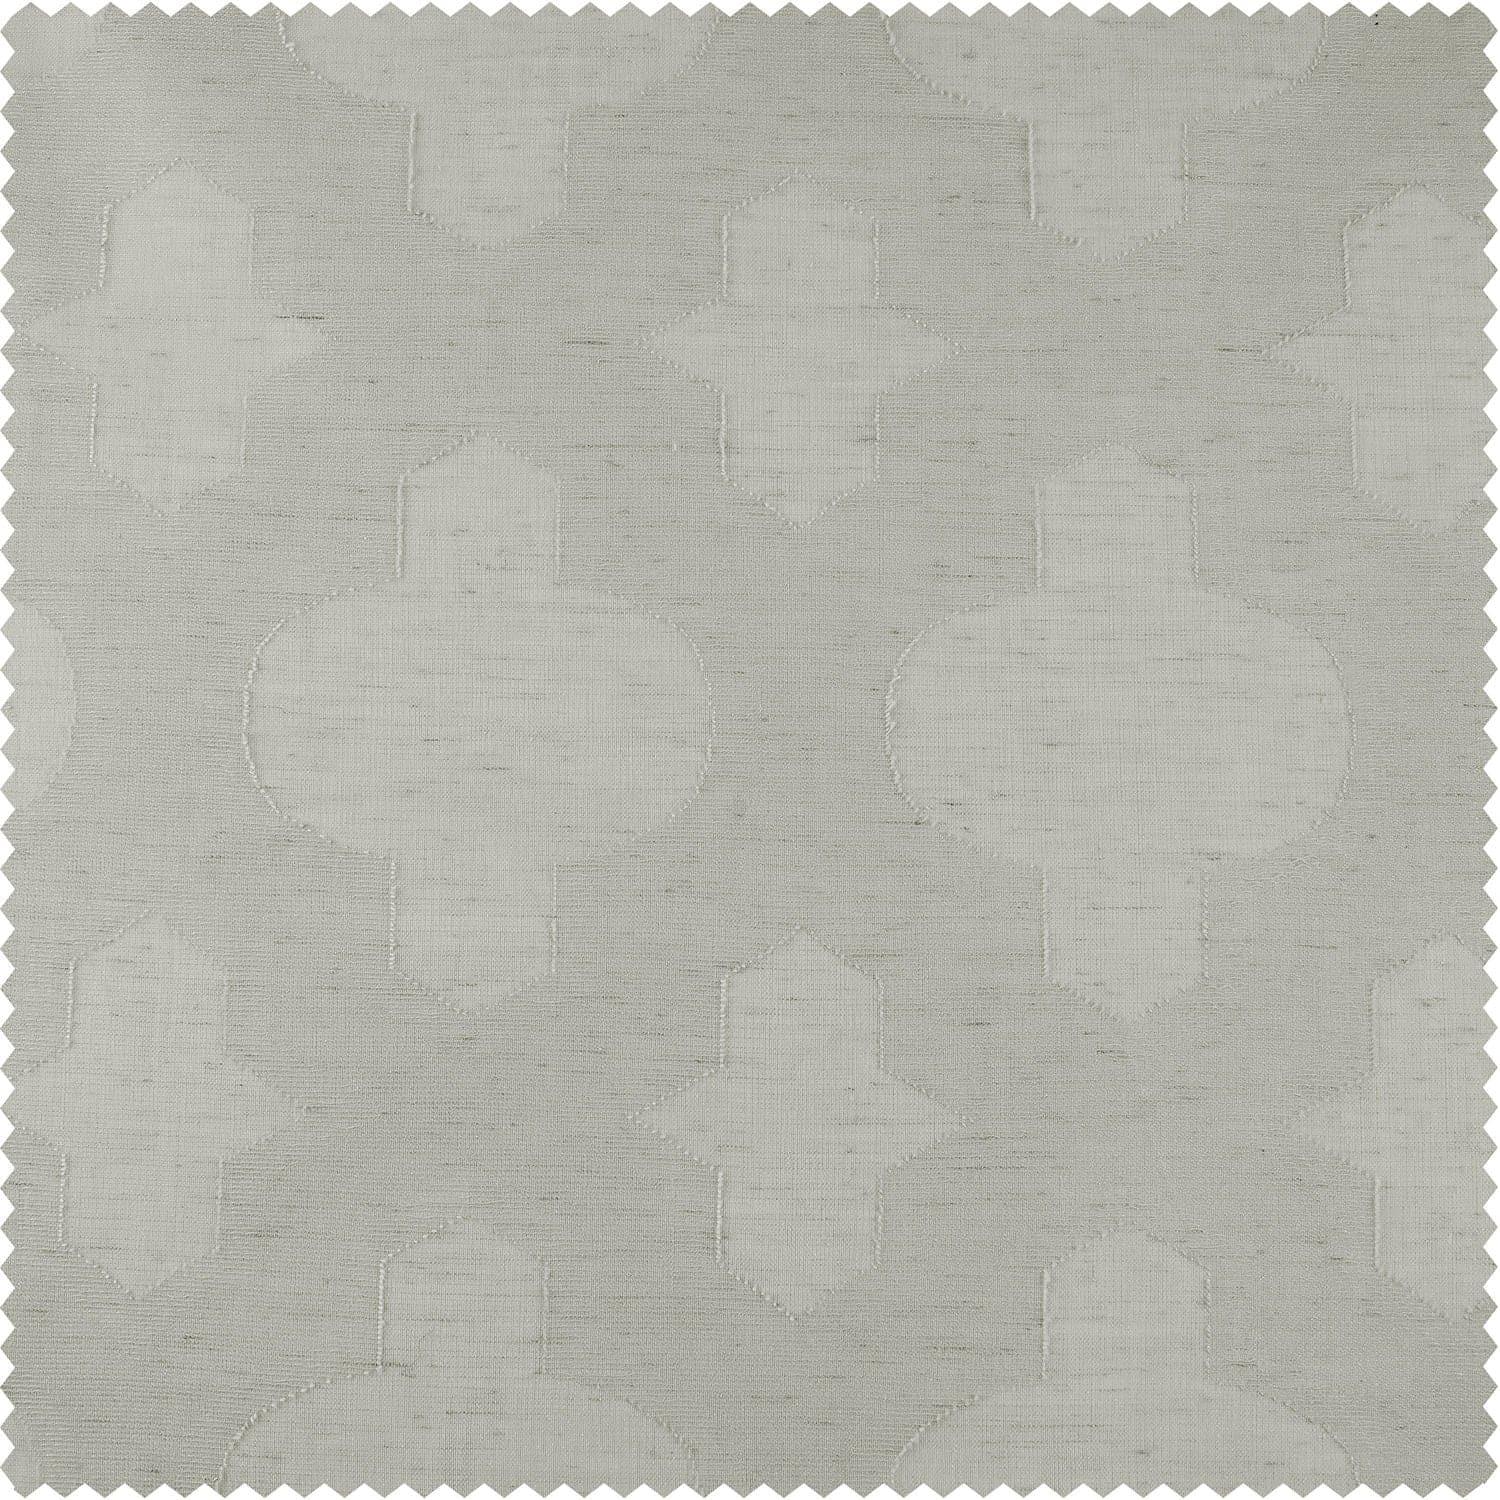 Calais Tile Grey Geometric Patterned Faux Linen Sheer Curtain